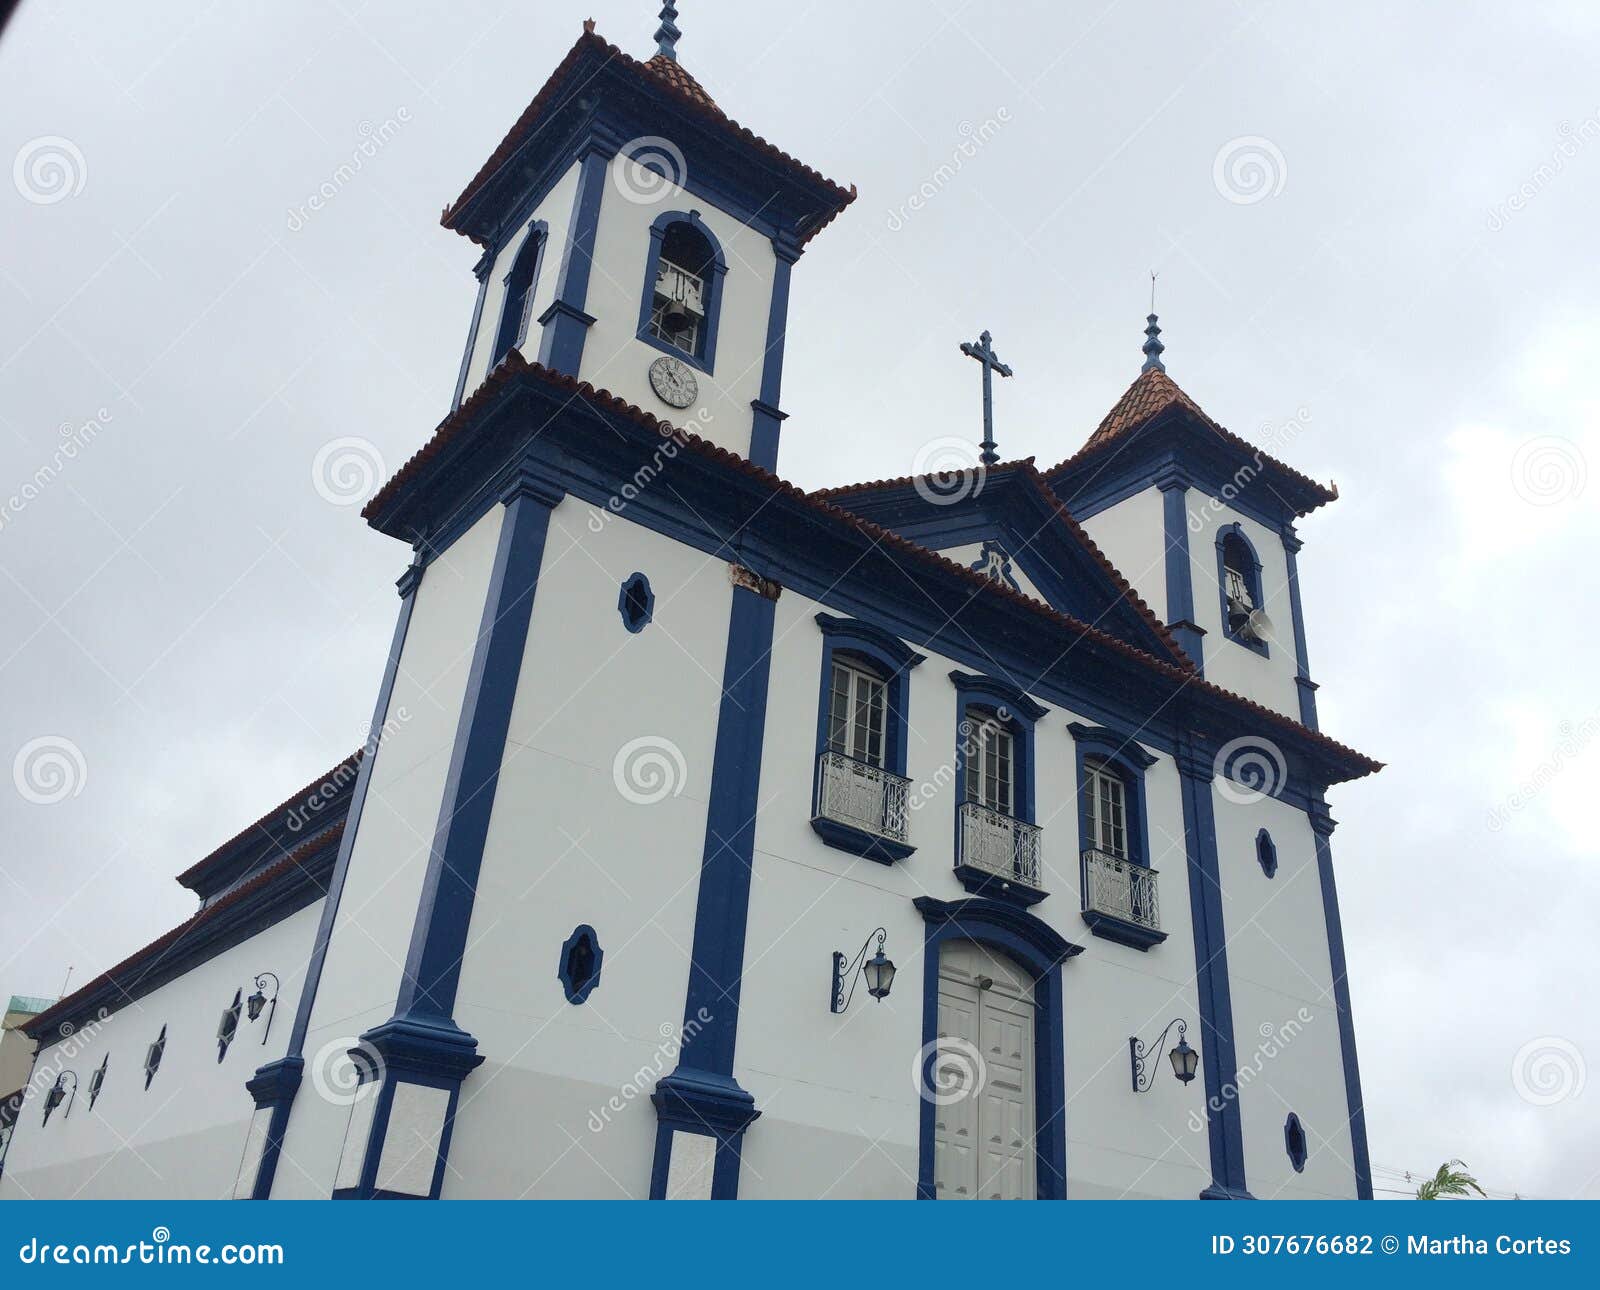 a late baroque style church in sete lagoas, brazil